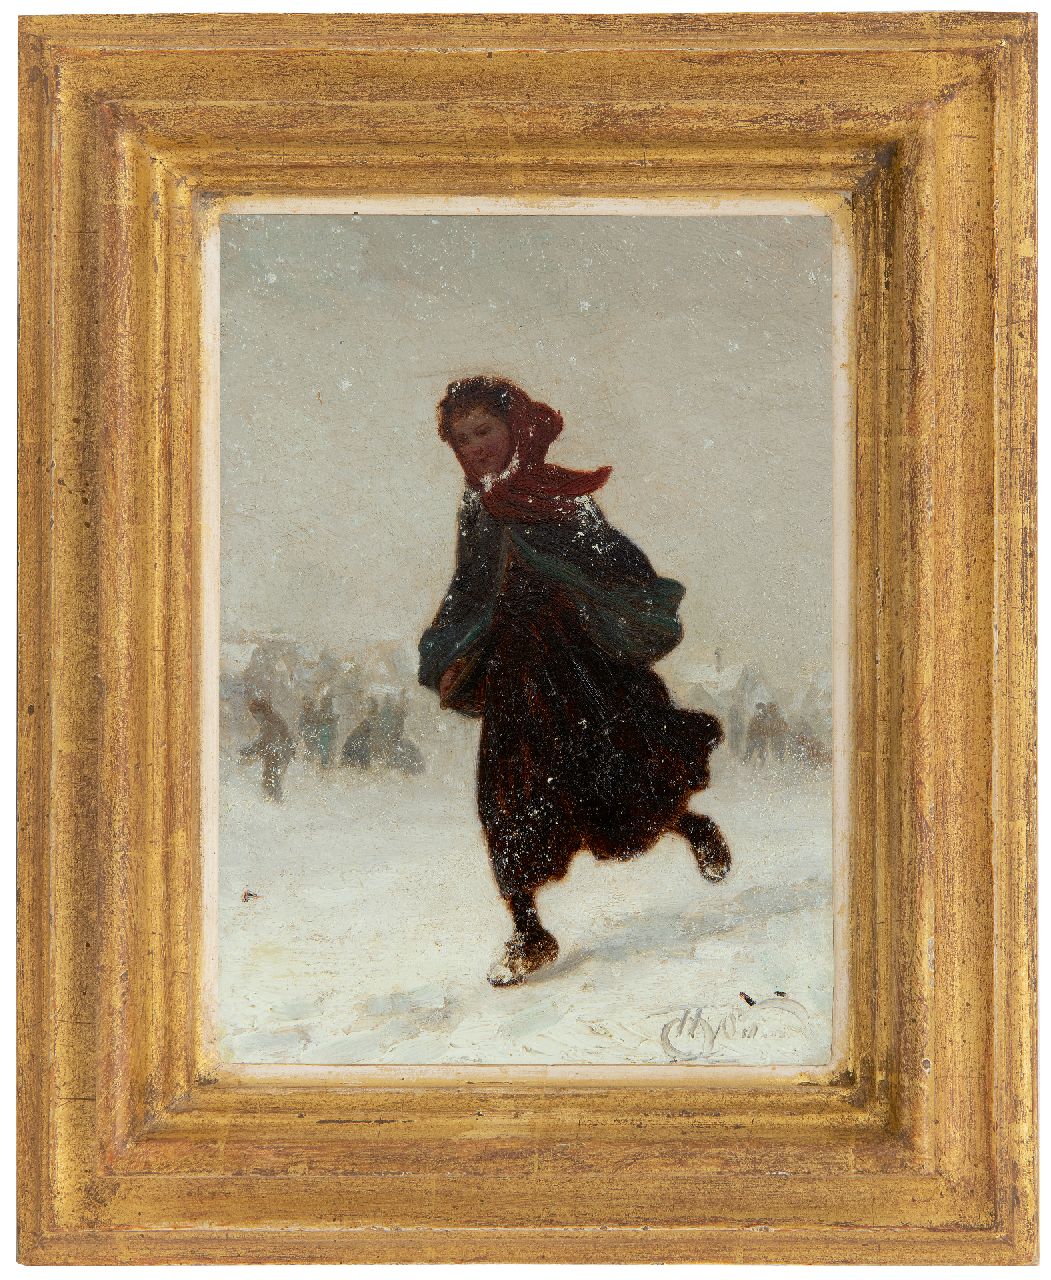 Seben H. van | Henri van Seben, Homeward bound in the snow, oil on panel 21.9 x 15.9 cm, signed l.r.